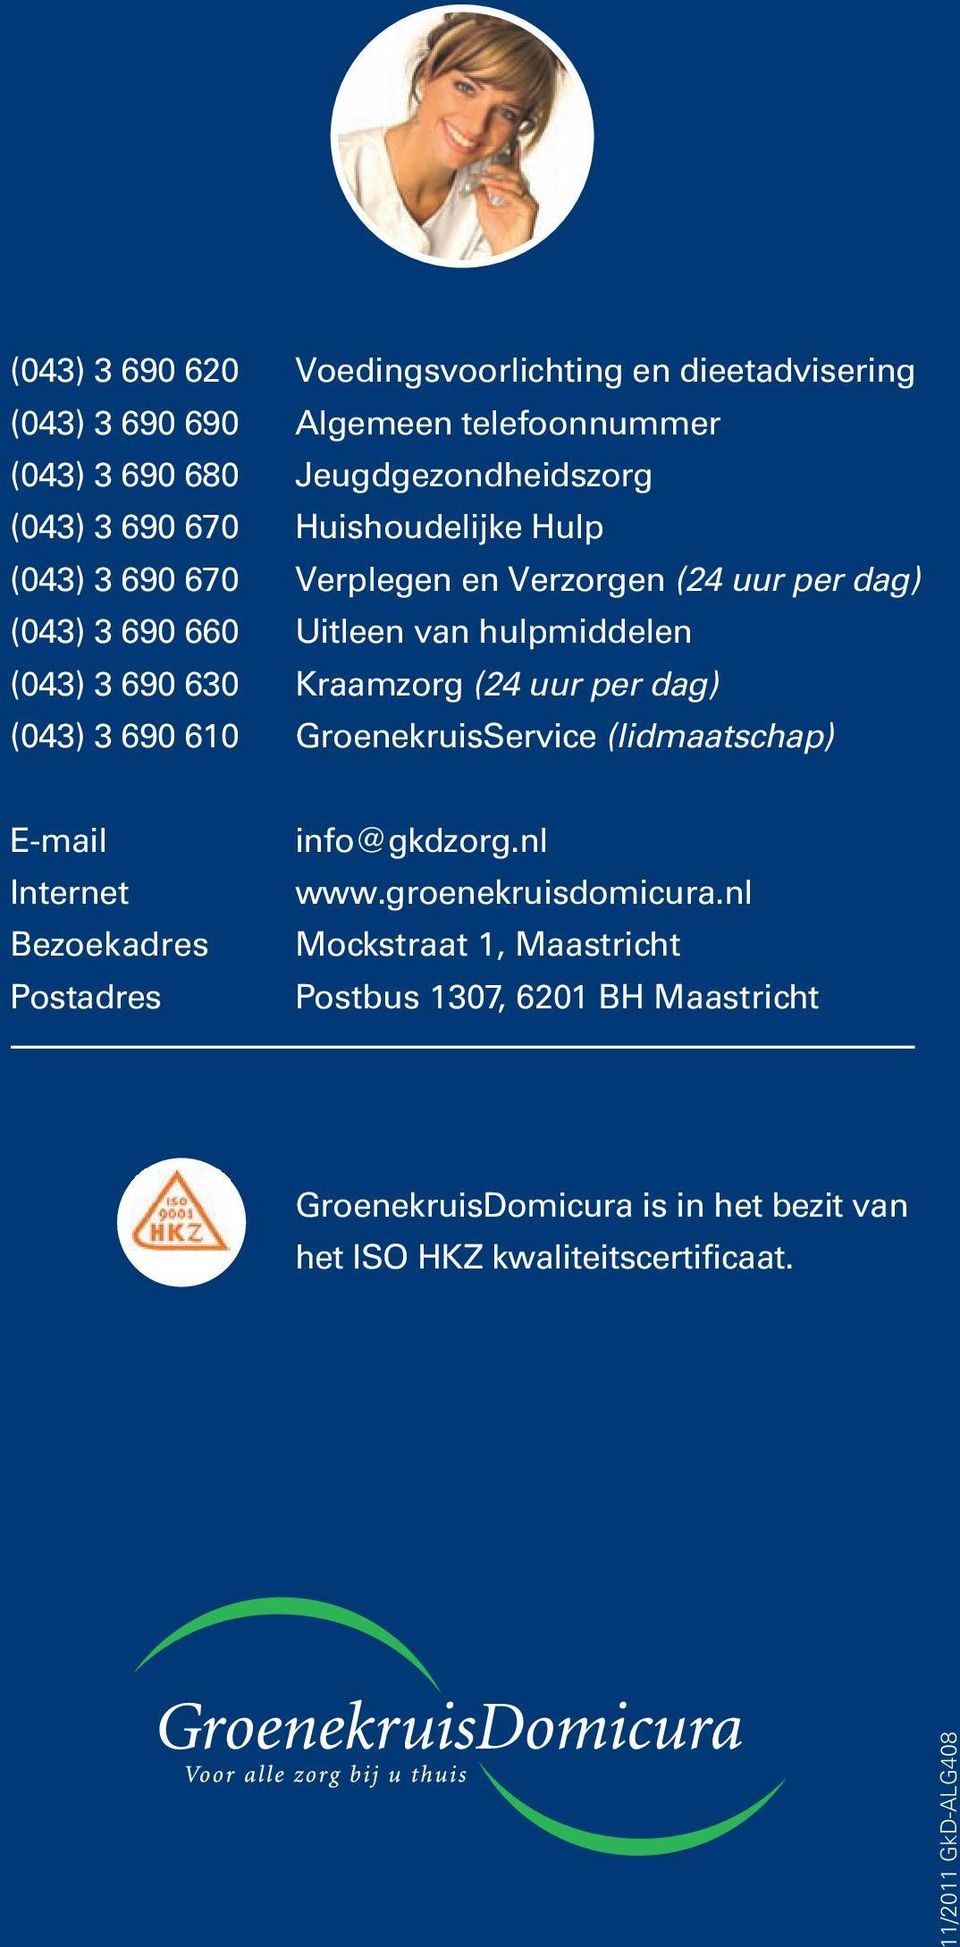 (24 uur per dag) (043) 3 690 610 GroenekruisService (lidmaatschap) E-mail Internet Bezoekadres Postadres info@gkdzorg.nl www.groenekruisdomicura.